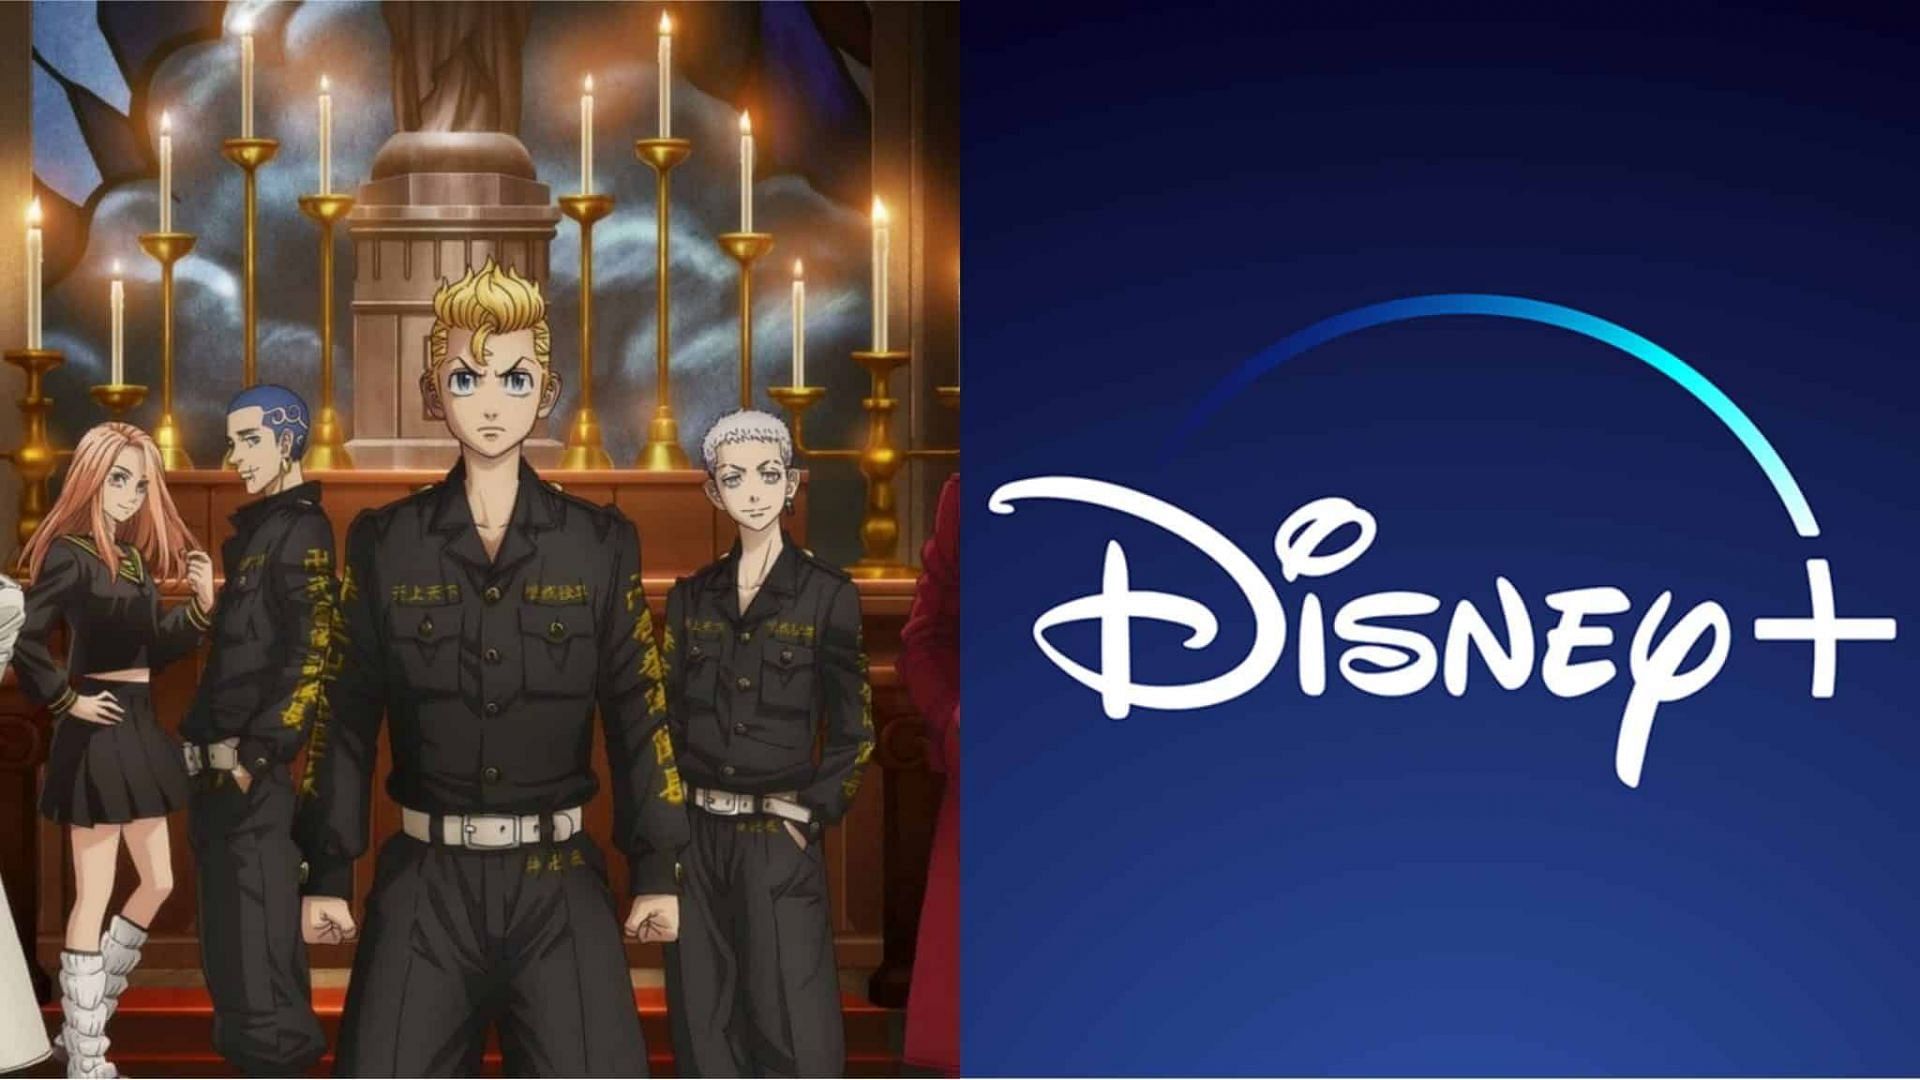 Tokyo Revengers season 2 is now available on Disney+ (Star hub